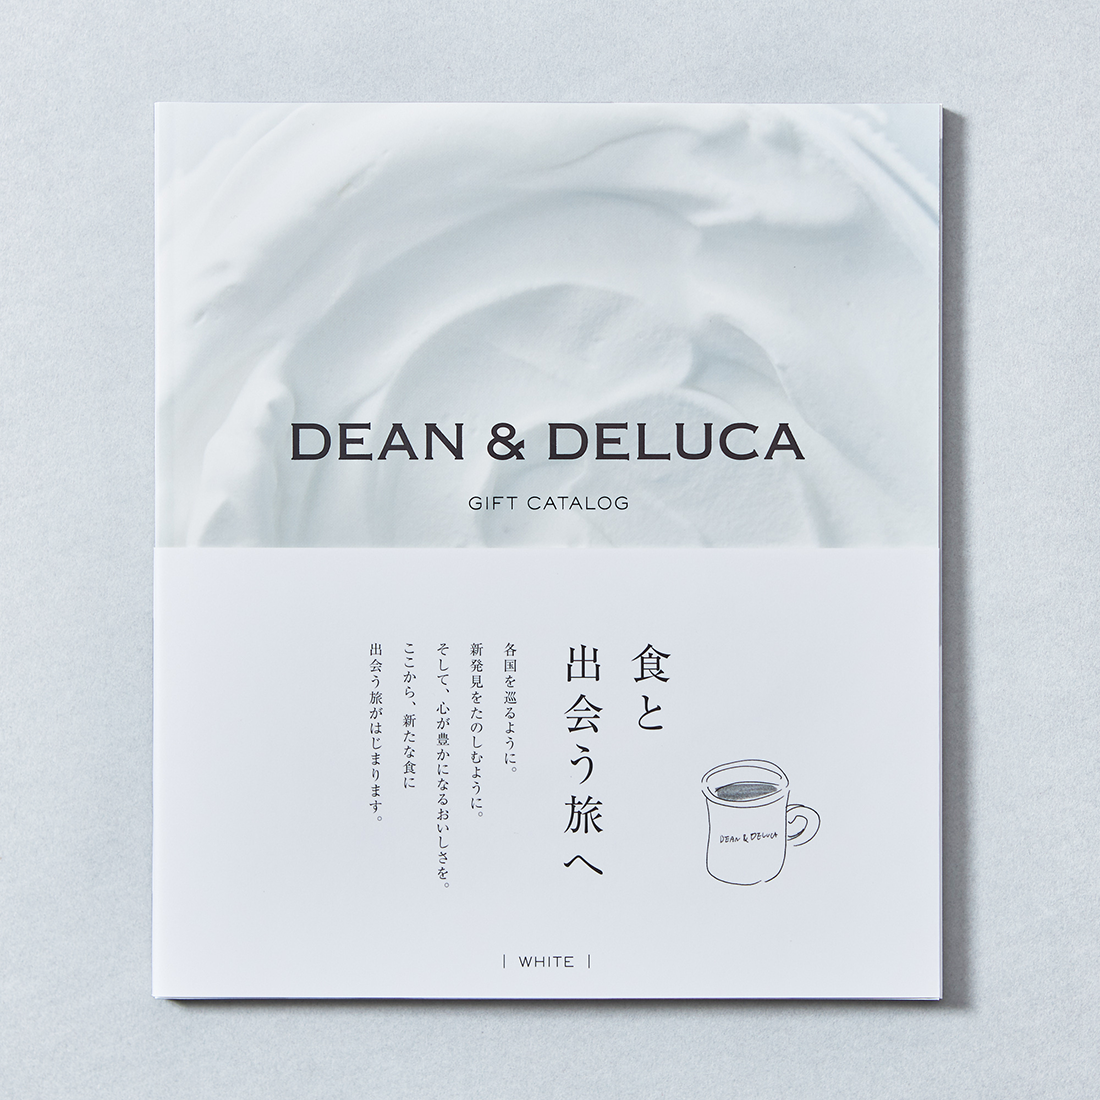 DEAN & DELUCA ギフトカタログ(ブックタイプ) ホワイト 外装開封